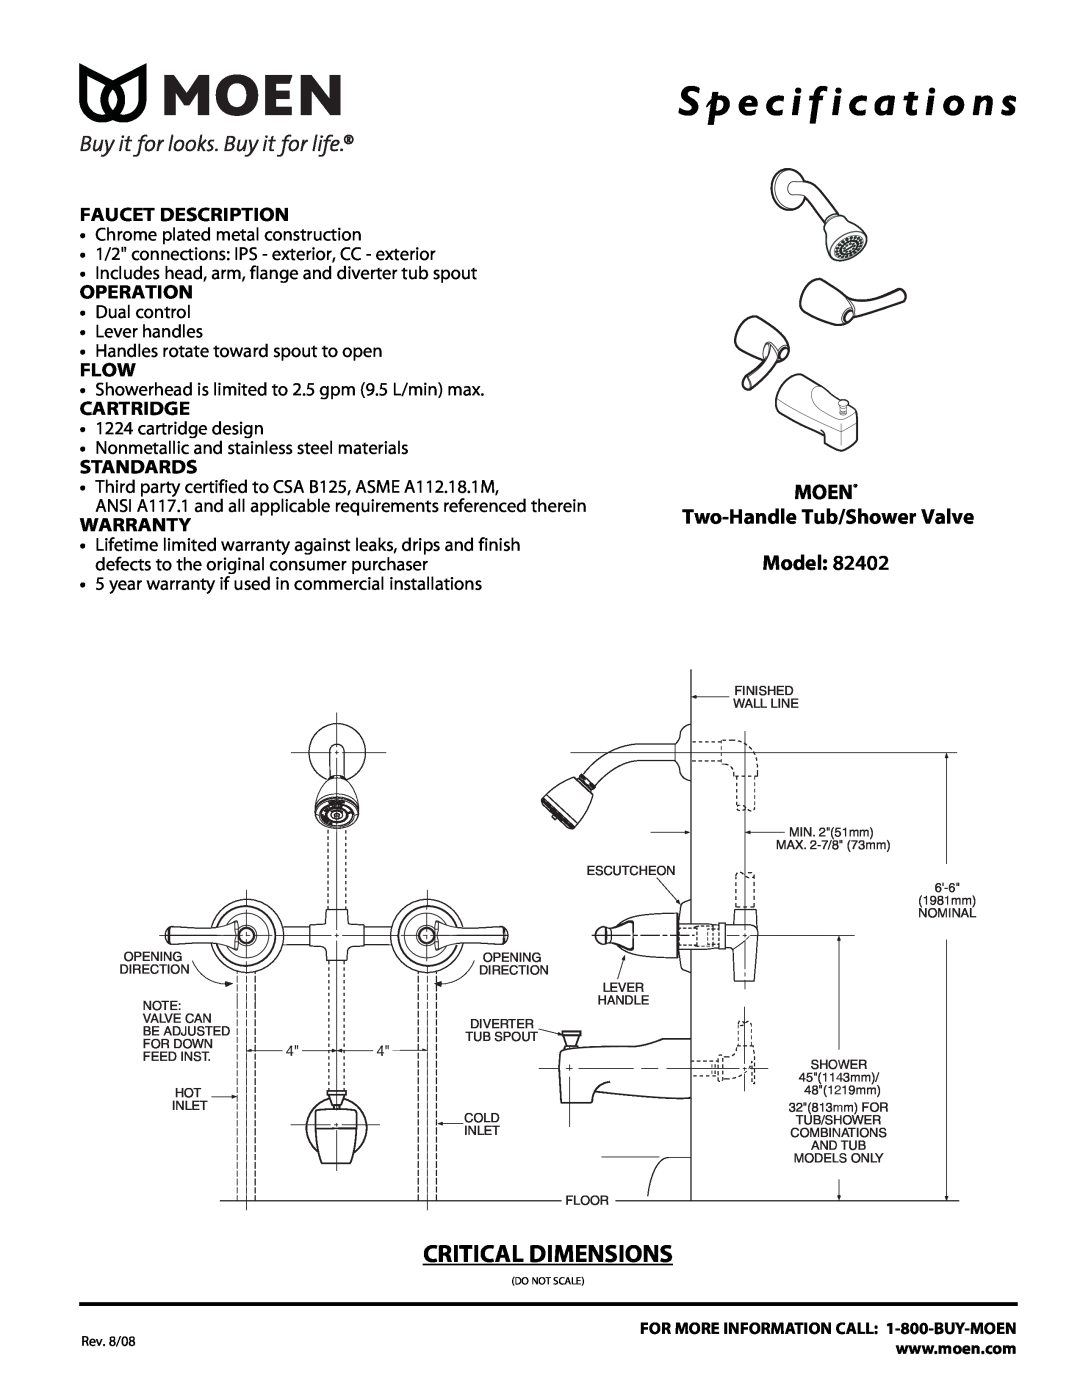 Moen 82402 specifications S p e c i f i c a t i o n s, Critical Dimensions, MOEN Two-Handle Tub/Shower Valve Model, Flow 